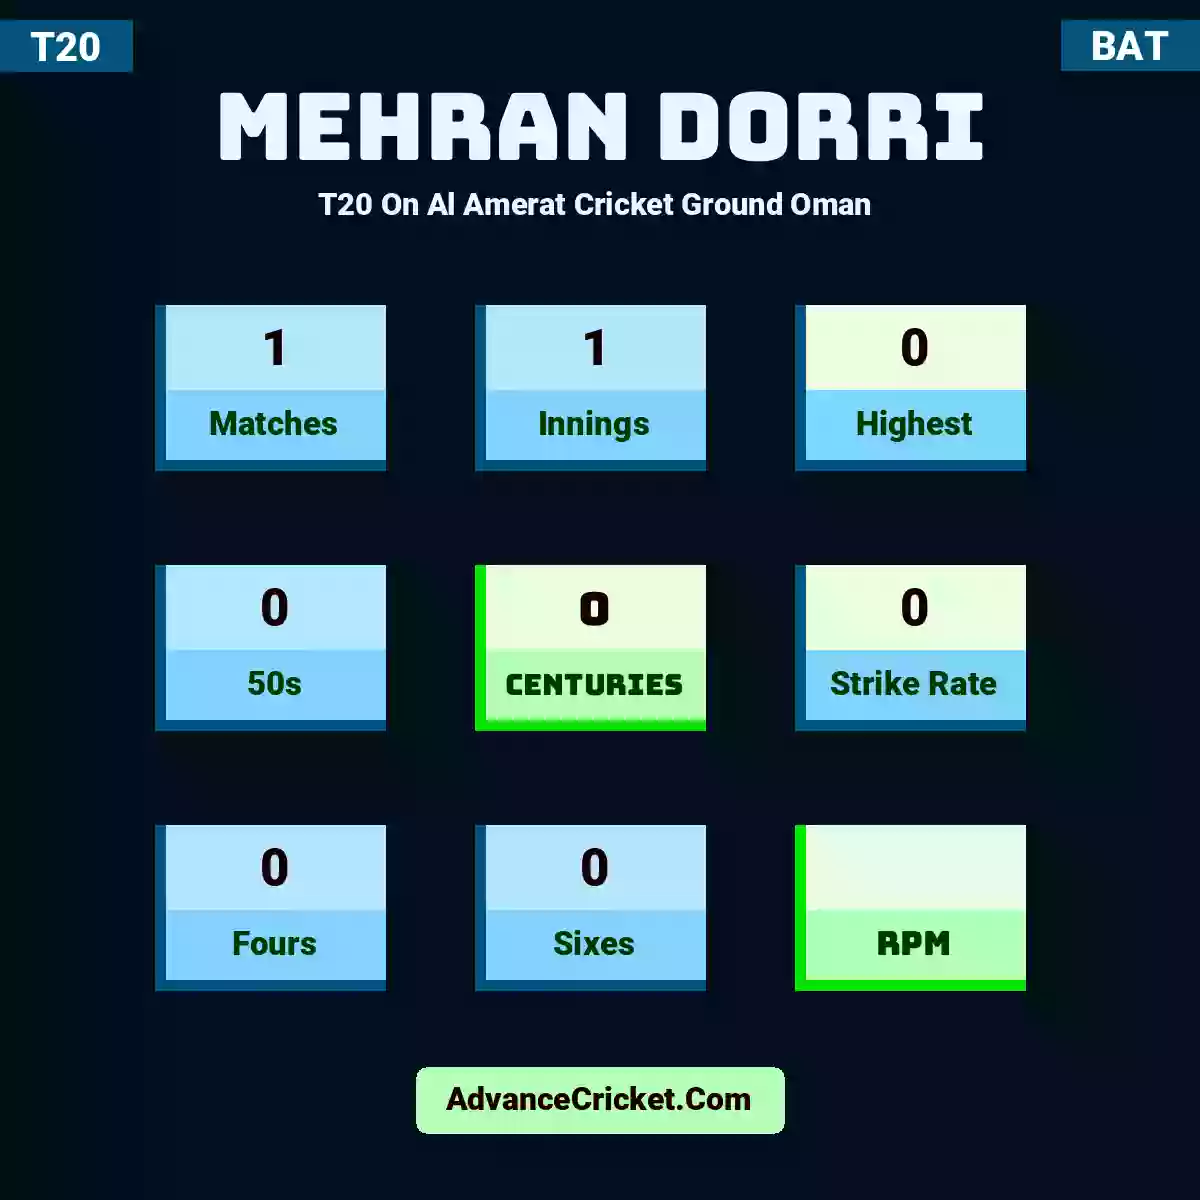 Mehran Dorri T20  On Al Amerat Cricket Ground Oman , Mehran Dorri played 1 matches, scored 0 runs as highest, 0 half-centuries, and 0 centuries, with a strike rate of 0. M.Dorri hit 0 fours and 0 sixes.